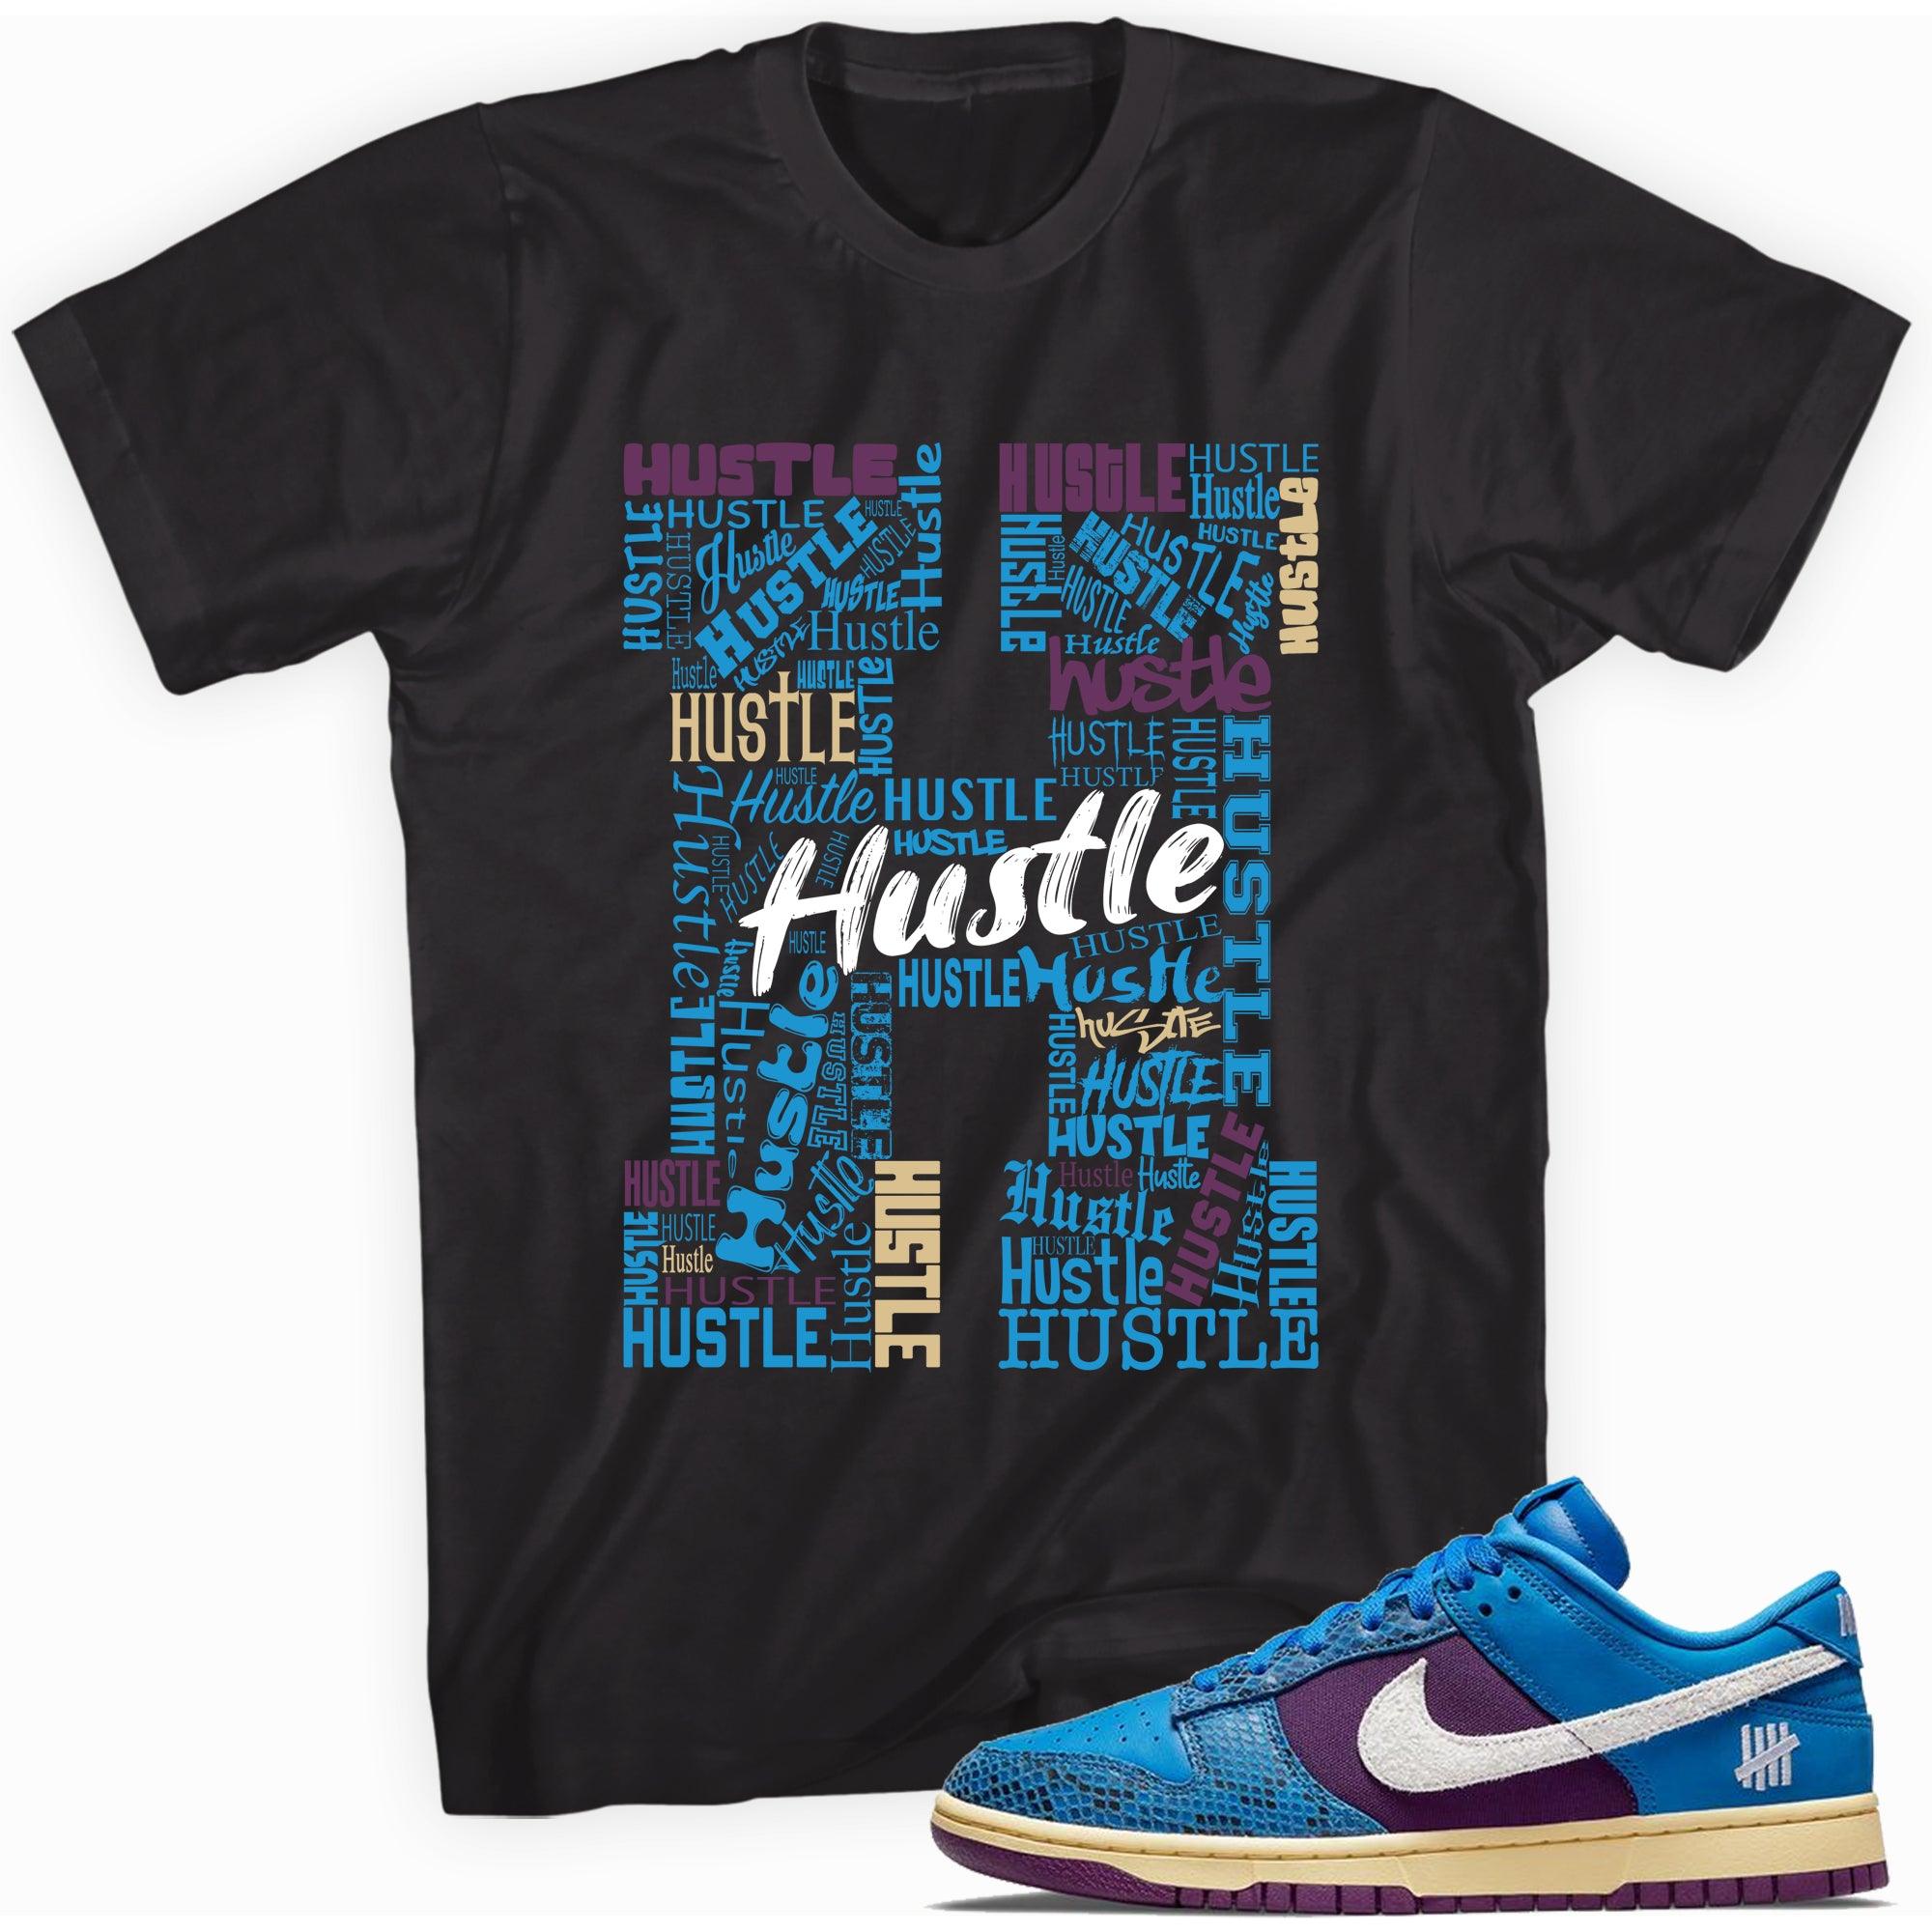 Black H for Hustle Shirt Nike Dunks Low Undefeated 5 On It Dunk vs AF1 photo